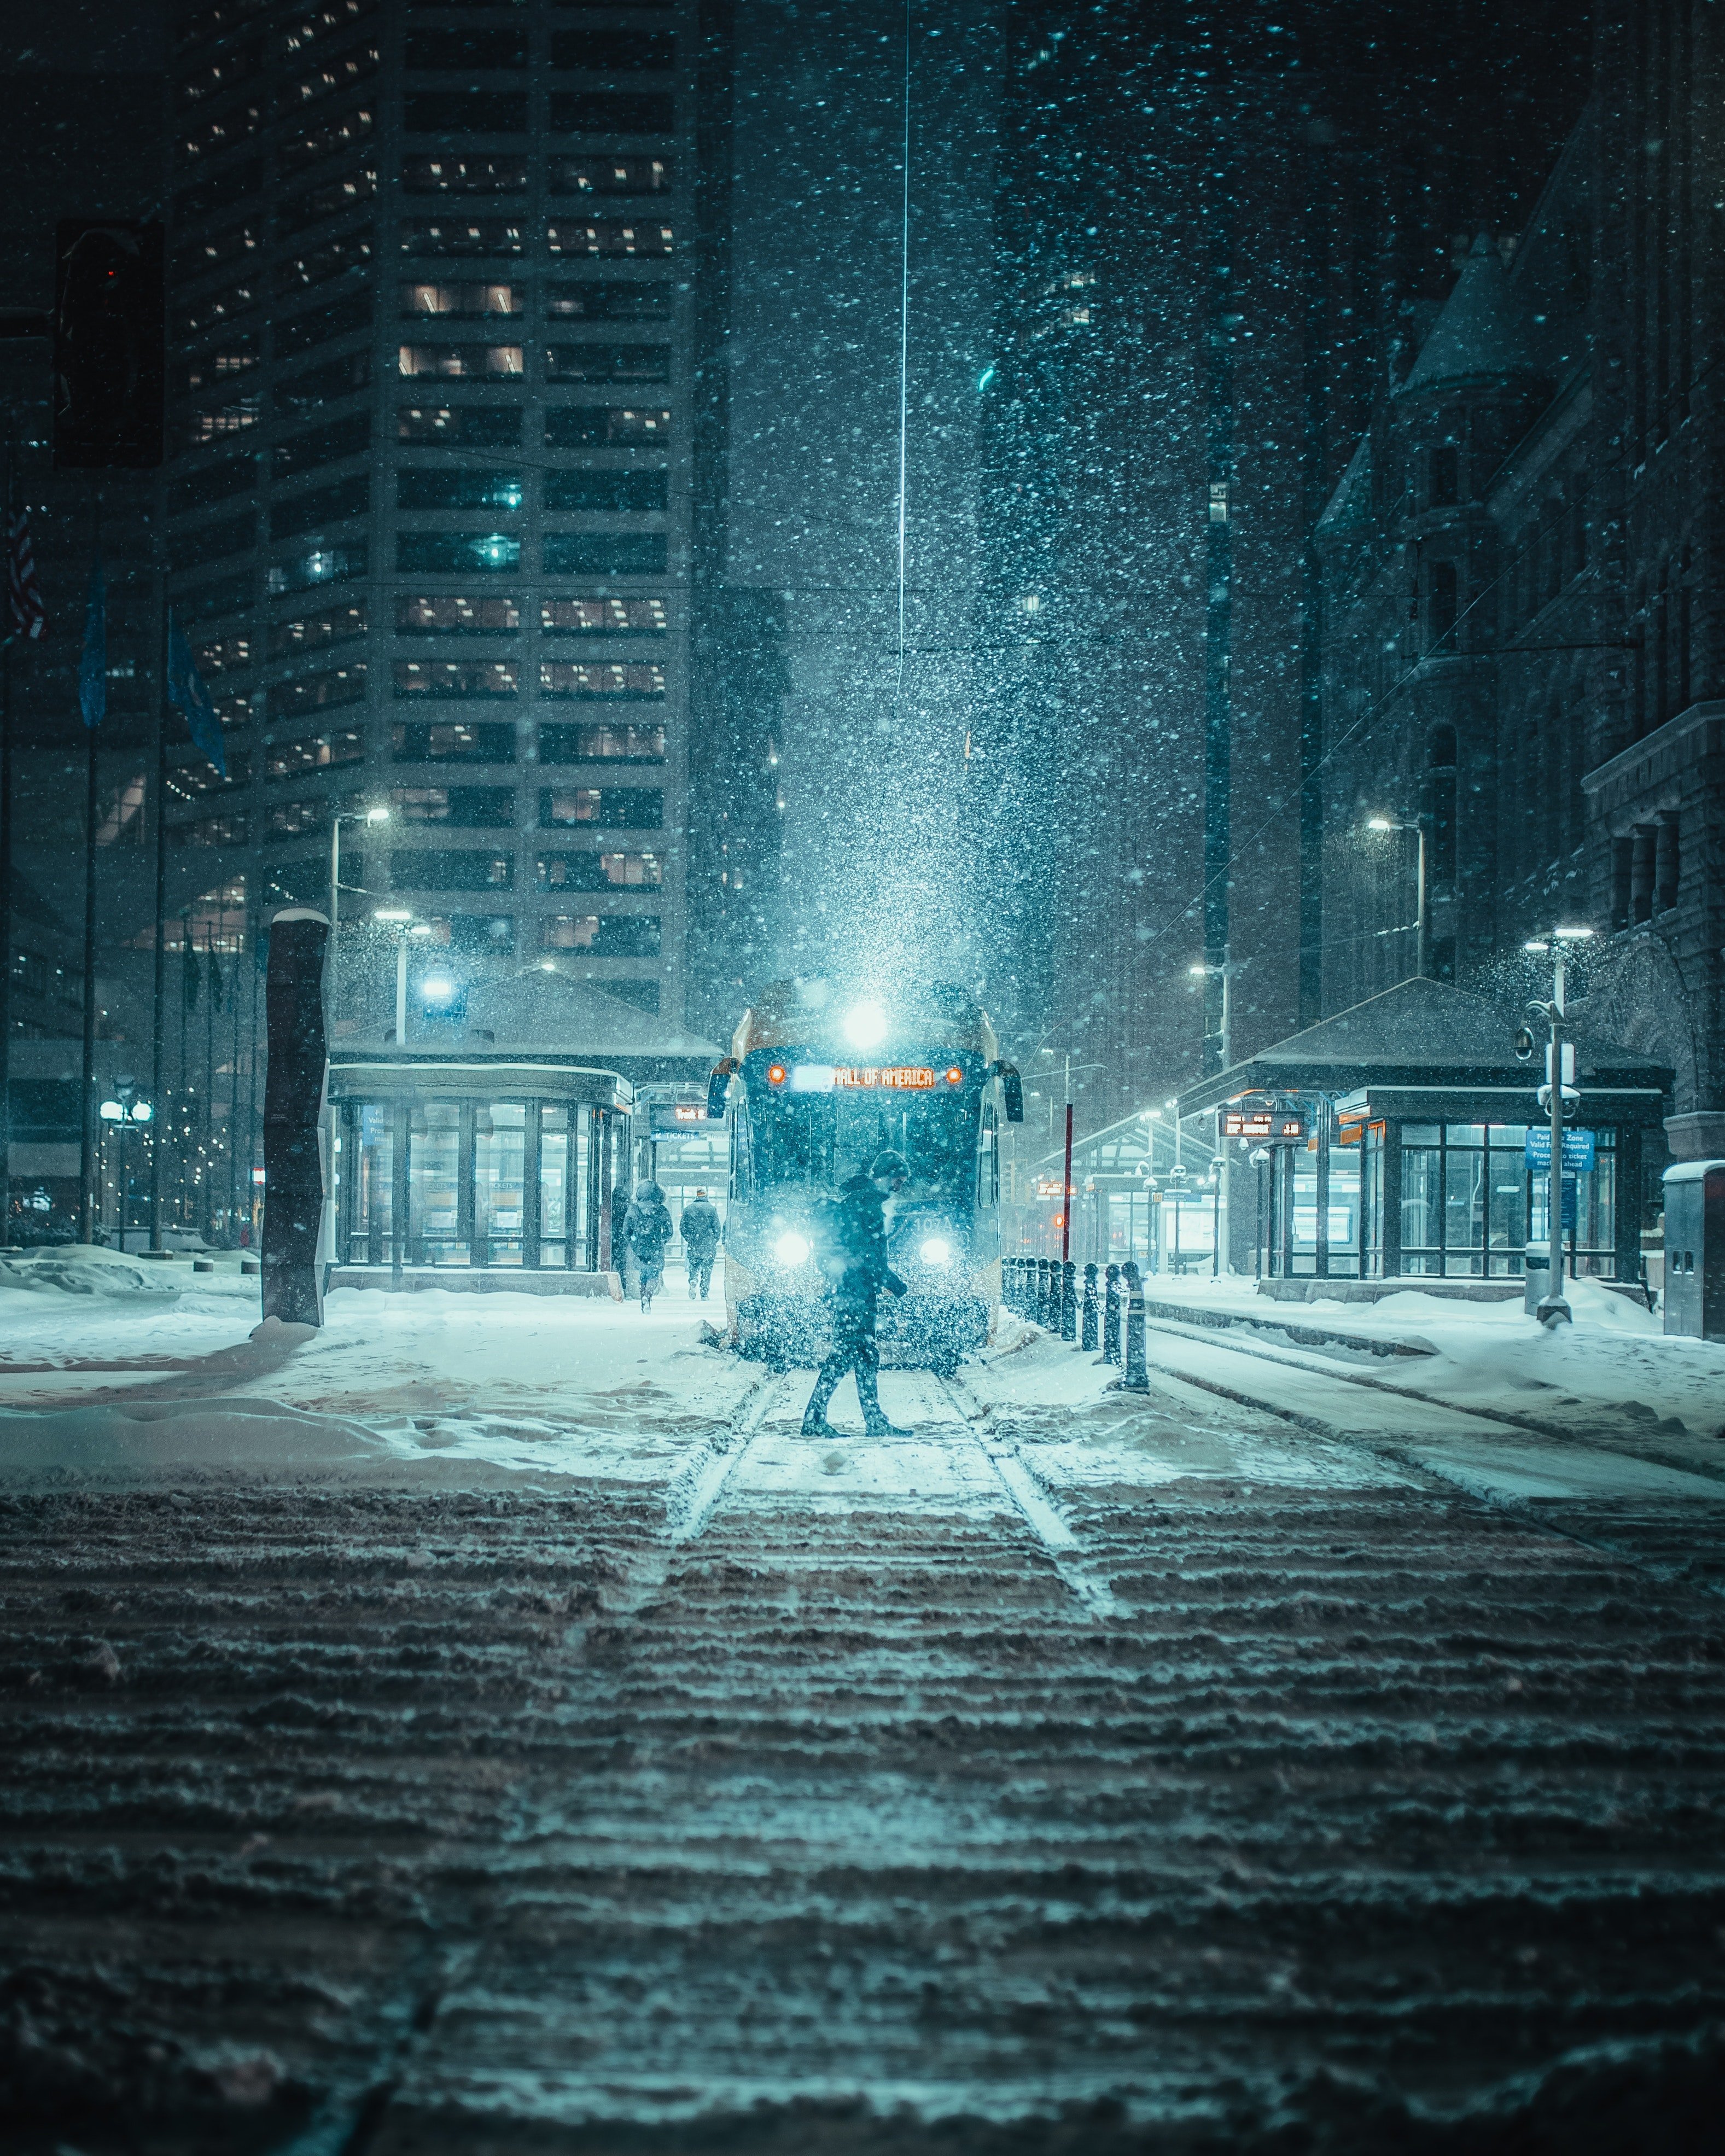 Winter in Minneapolis. | Source: Josh Hild/Pexels